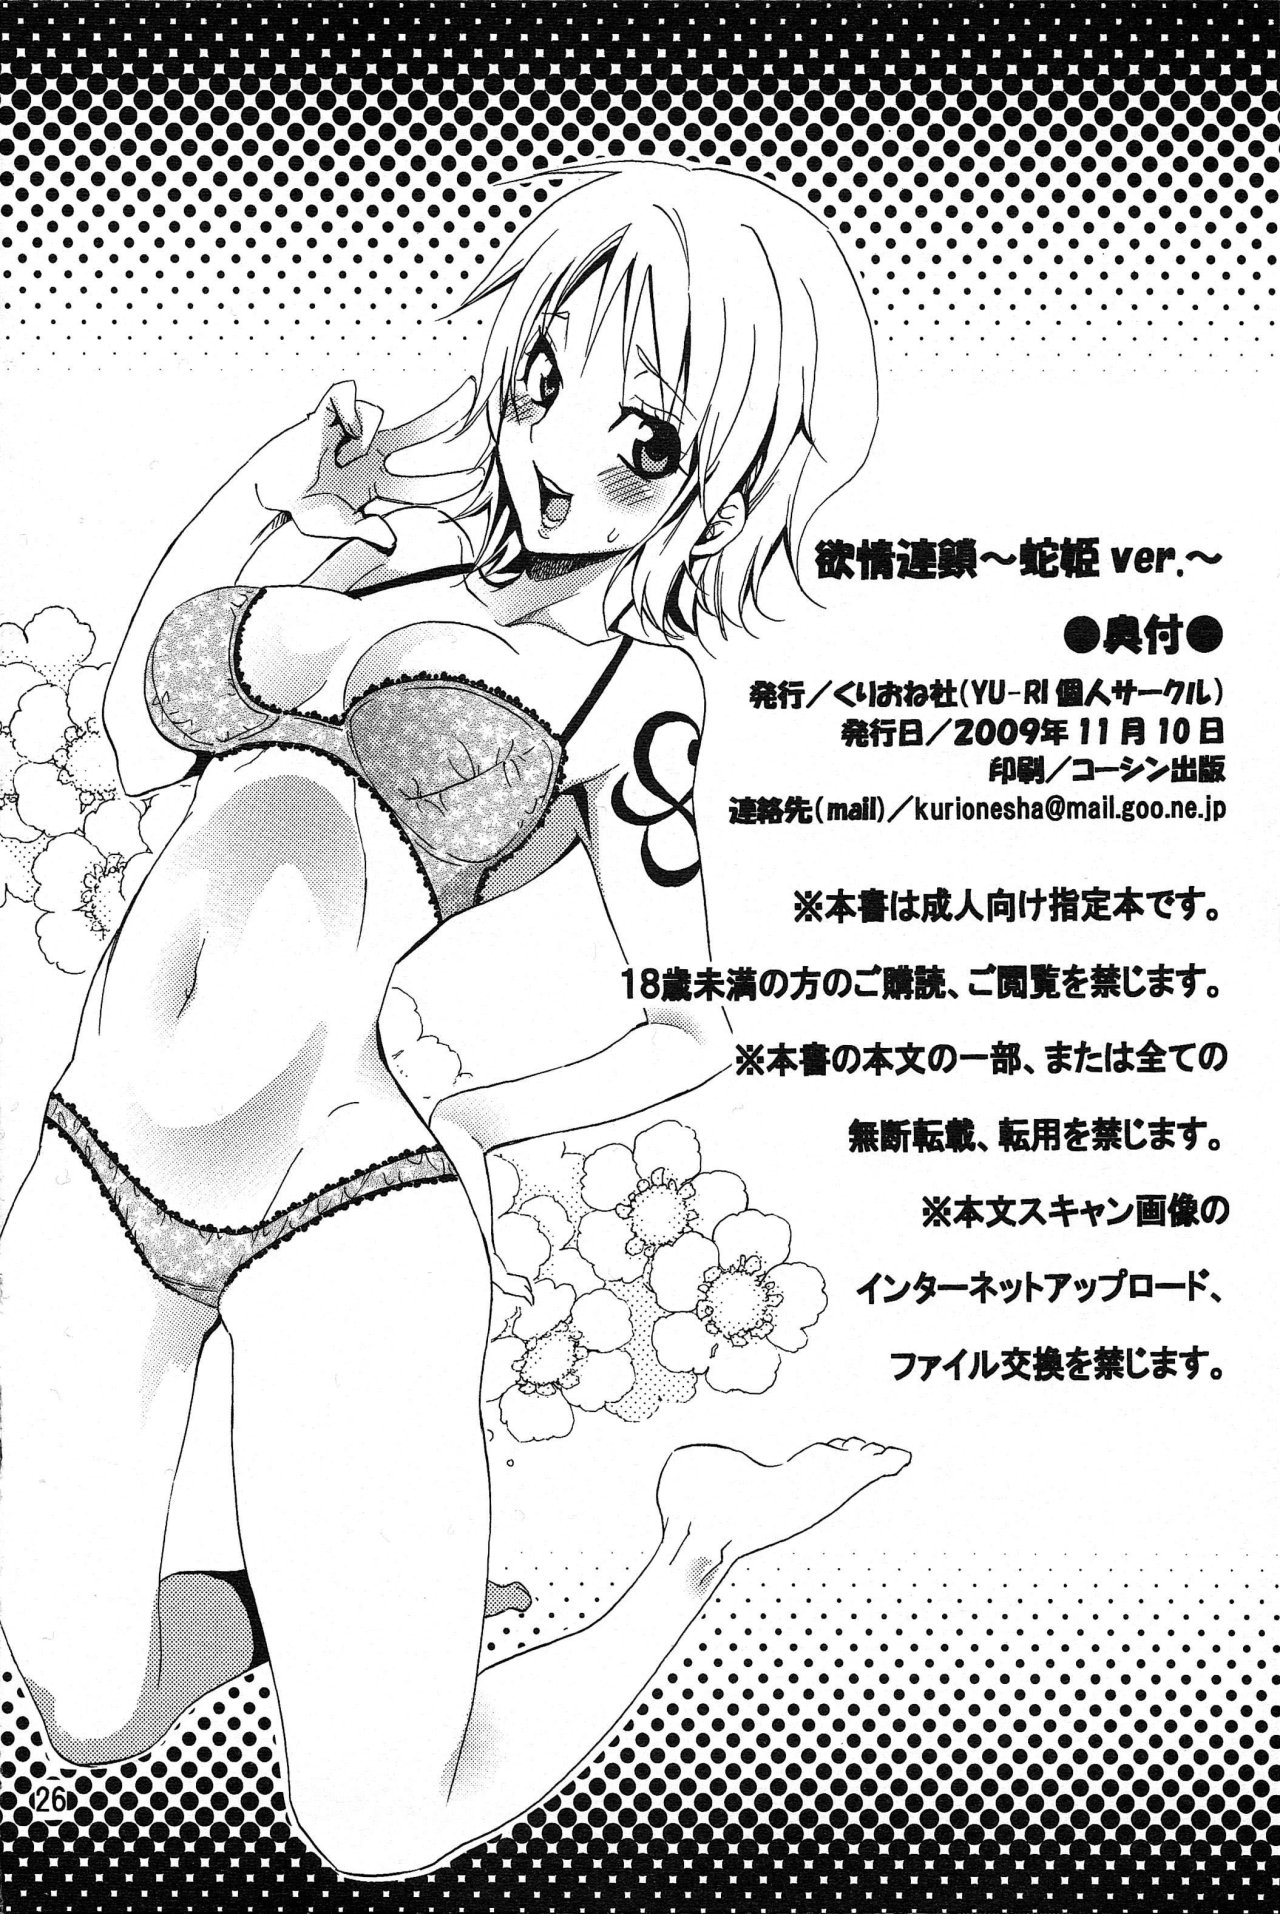 Yokujou Rensa Hebihime ver - Sexual Desire Cascade Snake Empress ver (One Piece) - 24